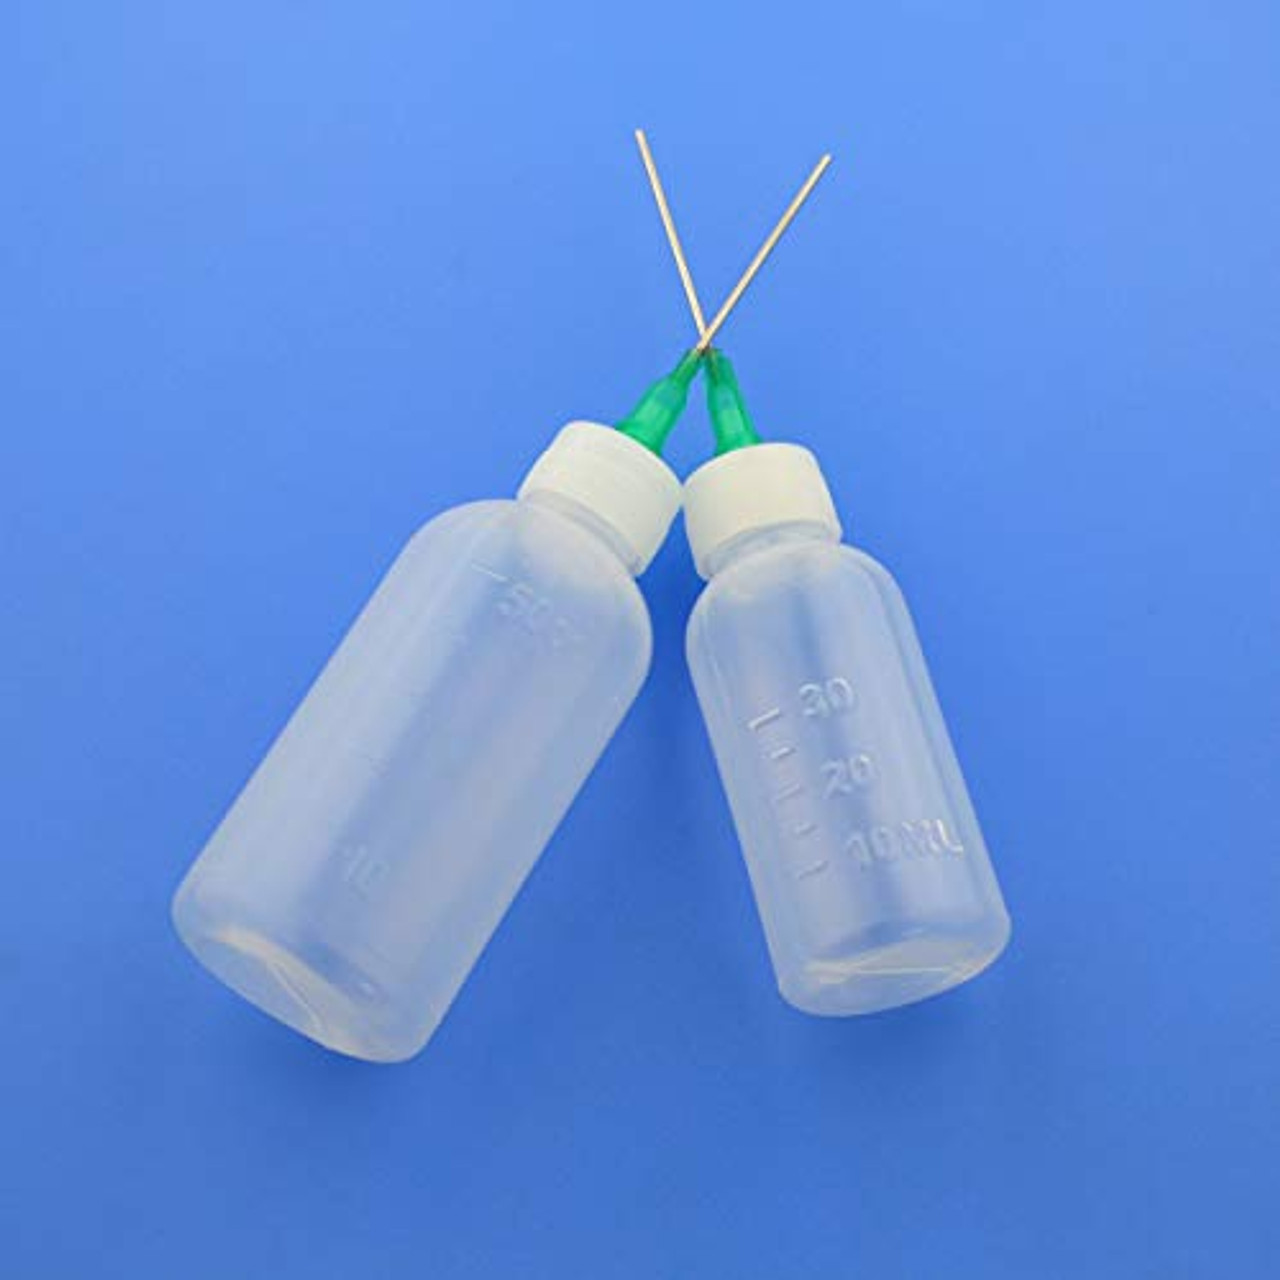 Empty Needle tip Applicator Bottle 50ml